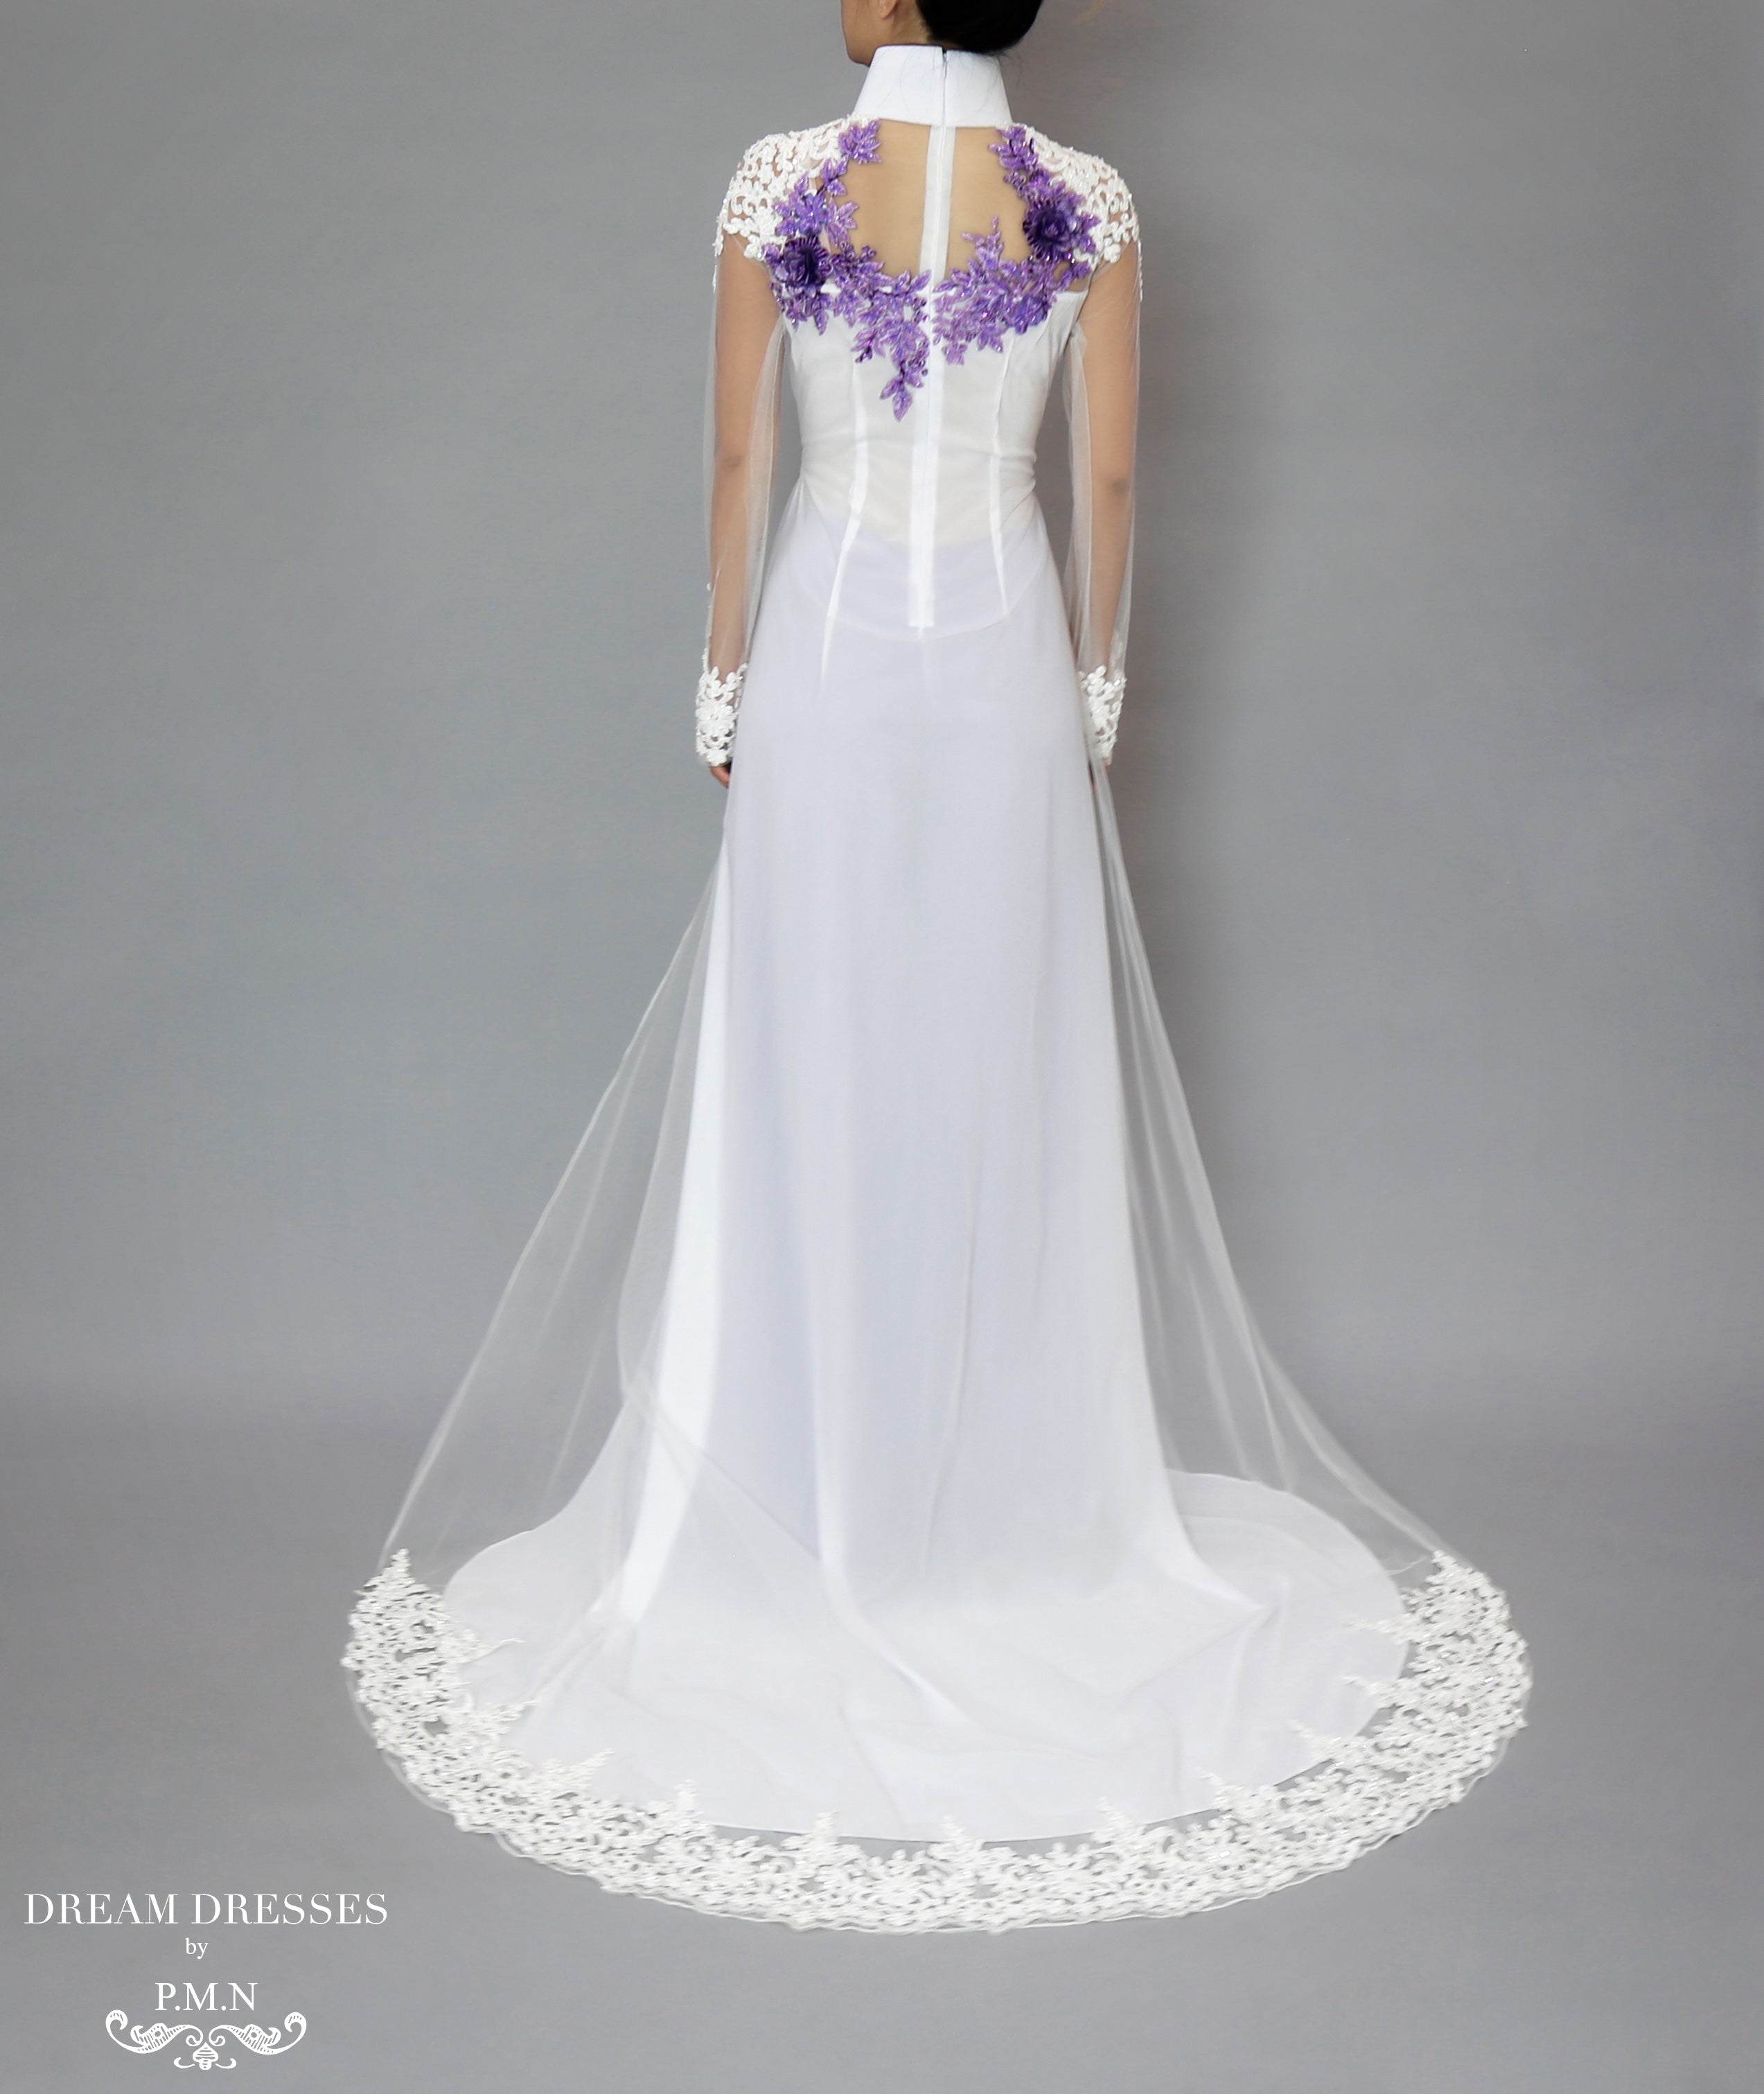 White and Purple Ao Dai | Beaded Lace Vietnamese Bridal Dress (#OCTAVIA)